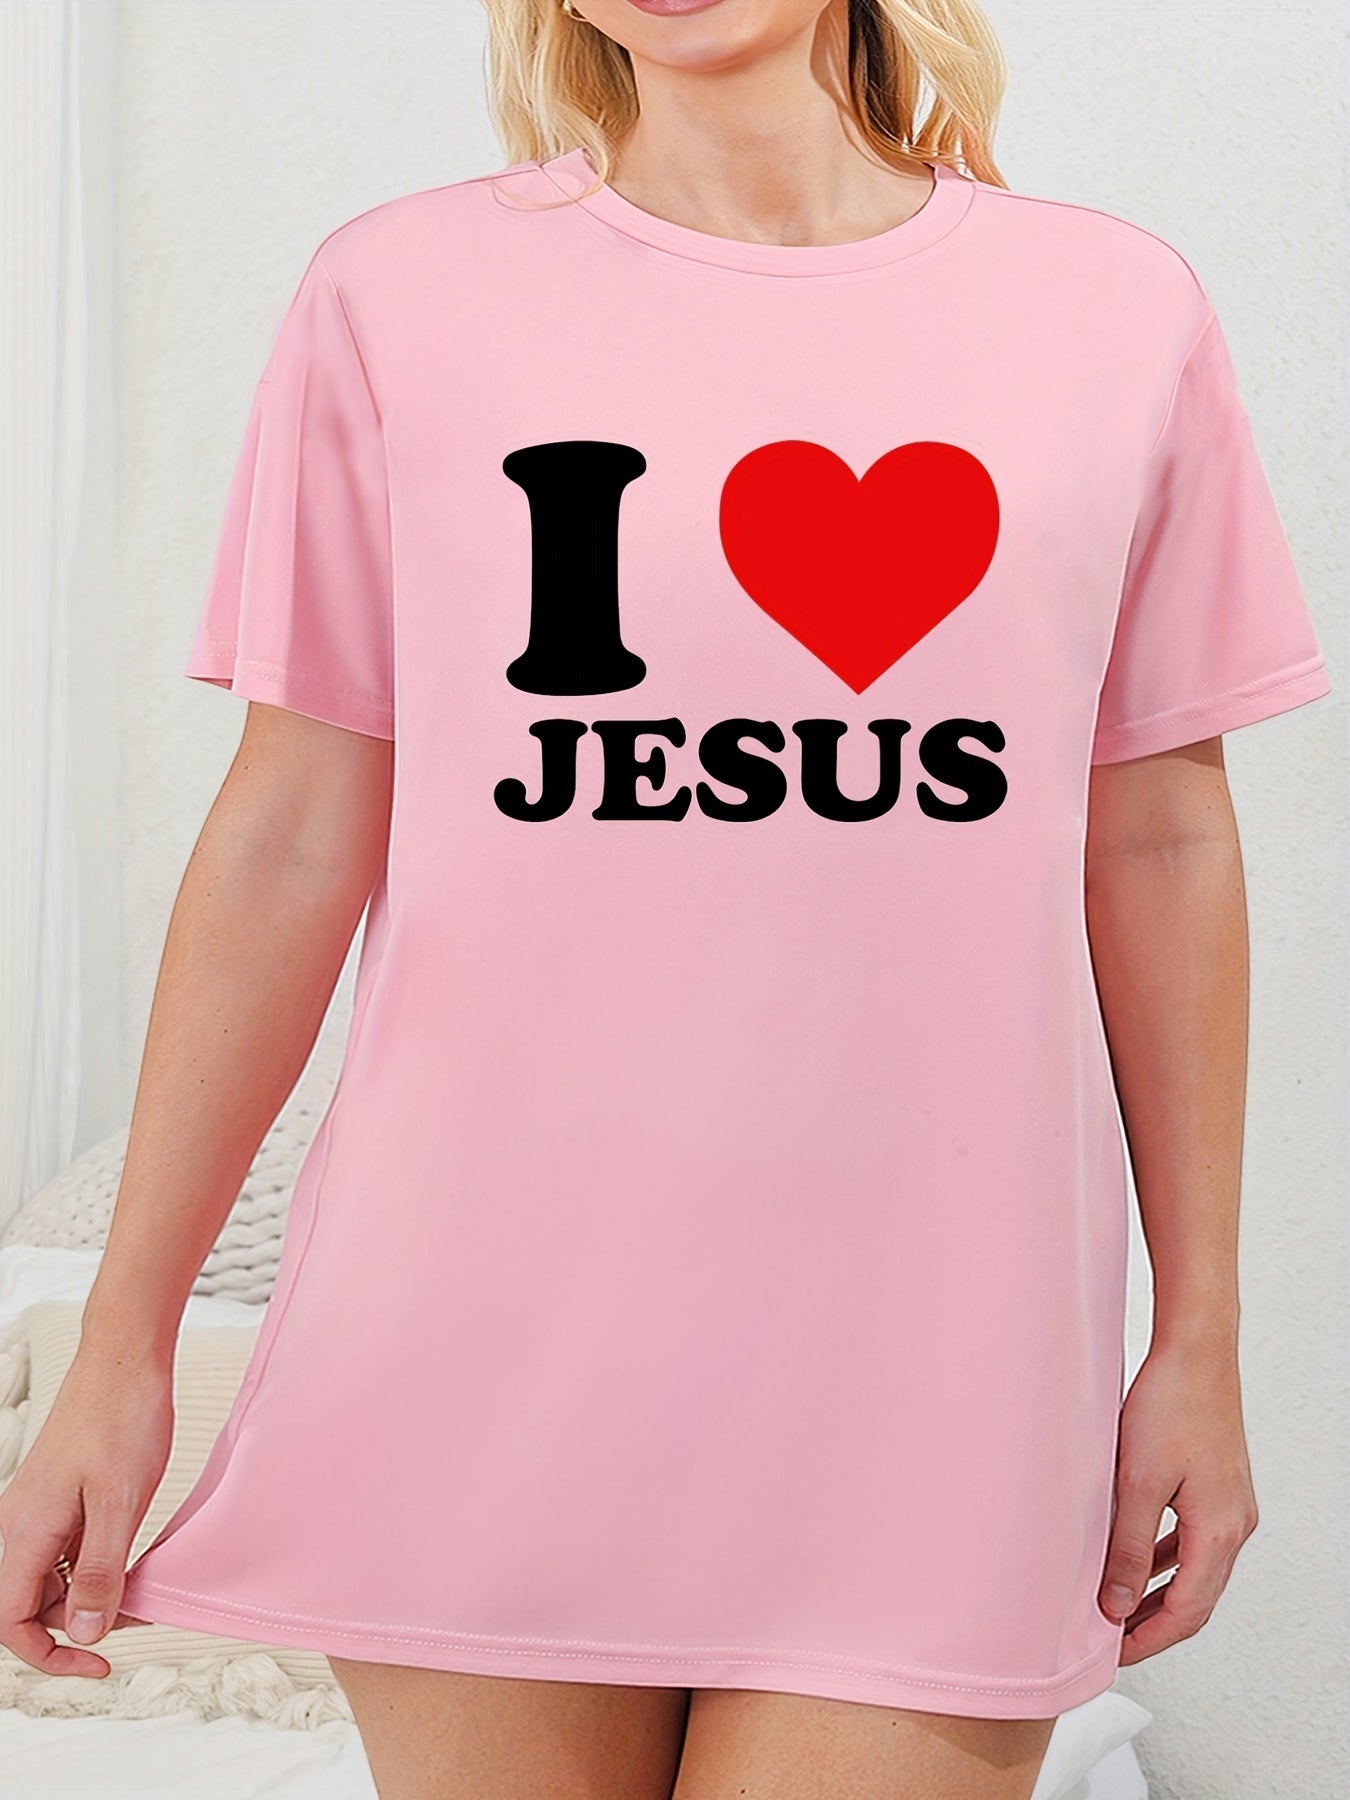 I Love Jesus Plus Size Women's Christian Pajamas claimedbygoddesigns